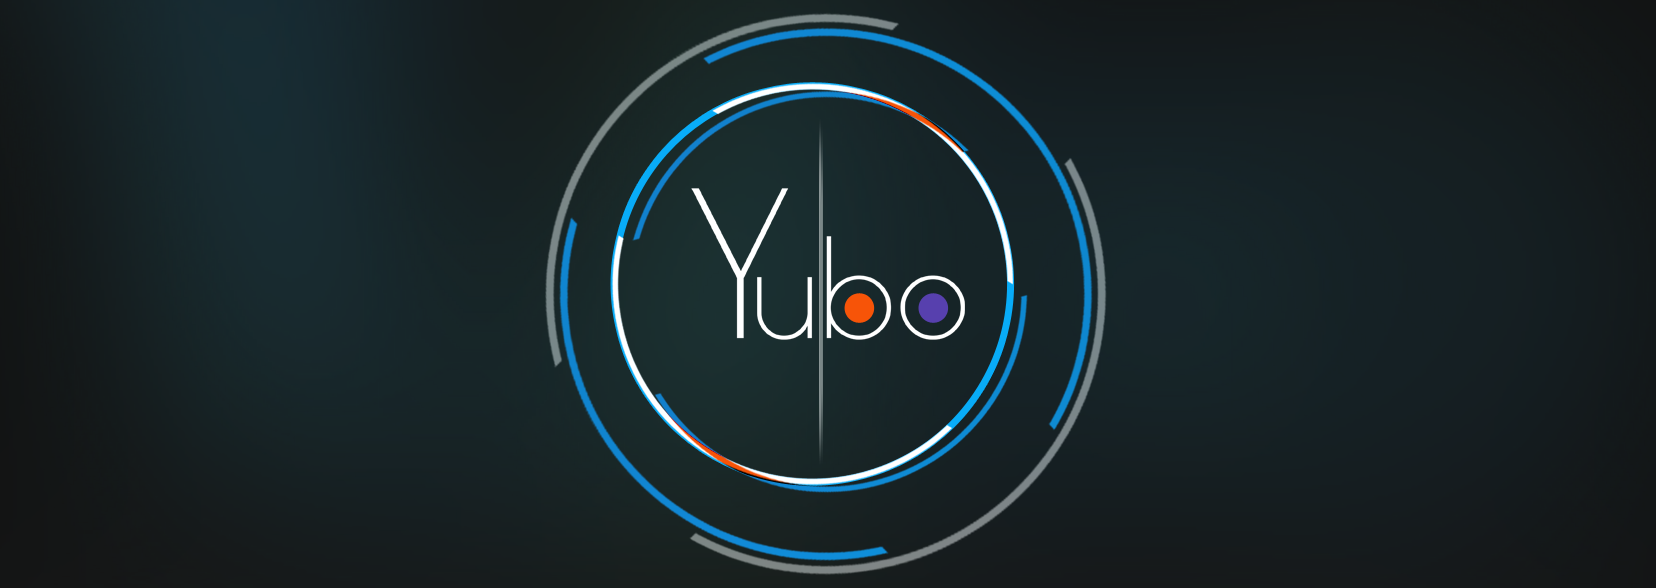 Yubo Welcome